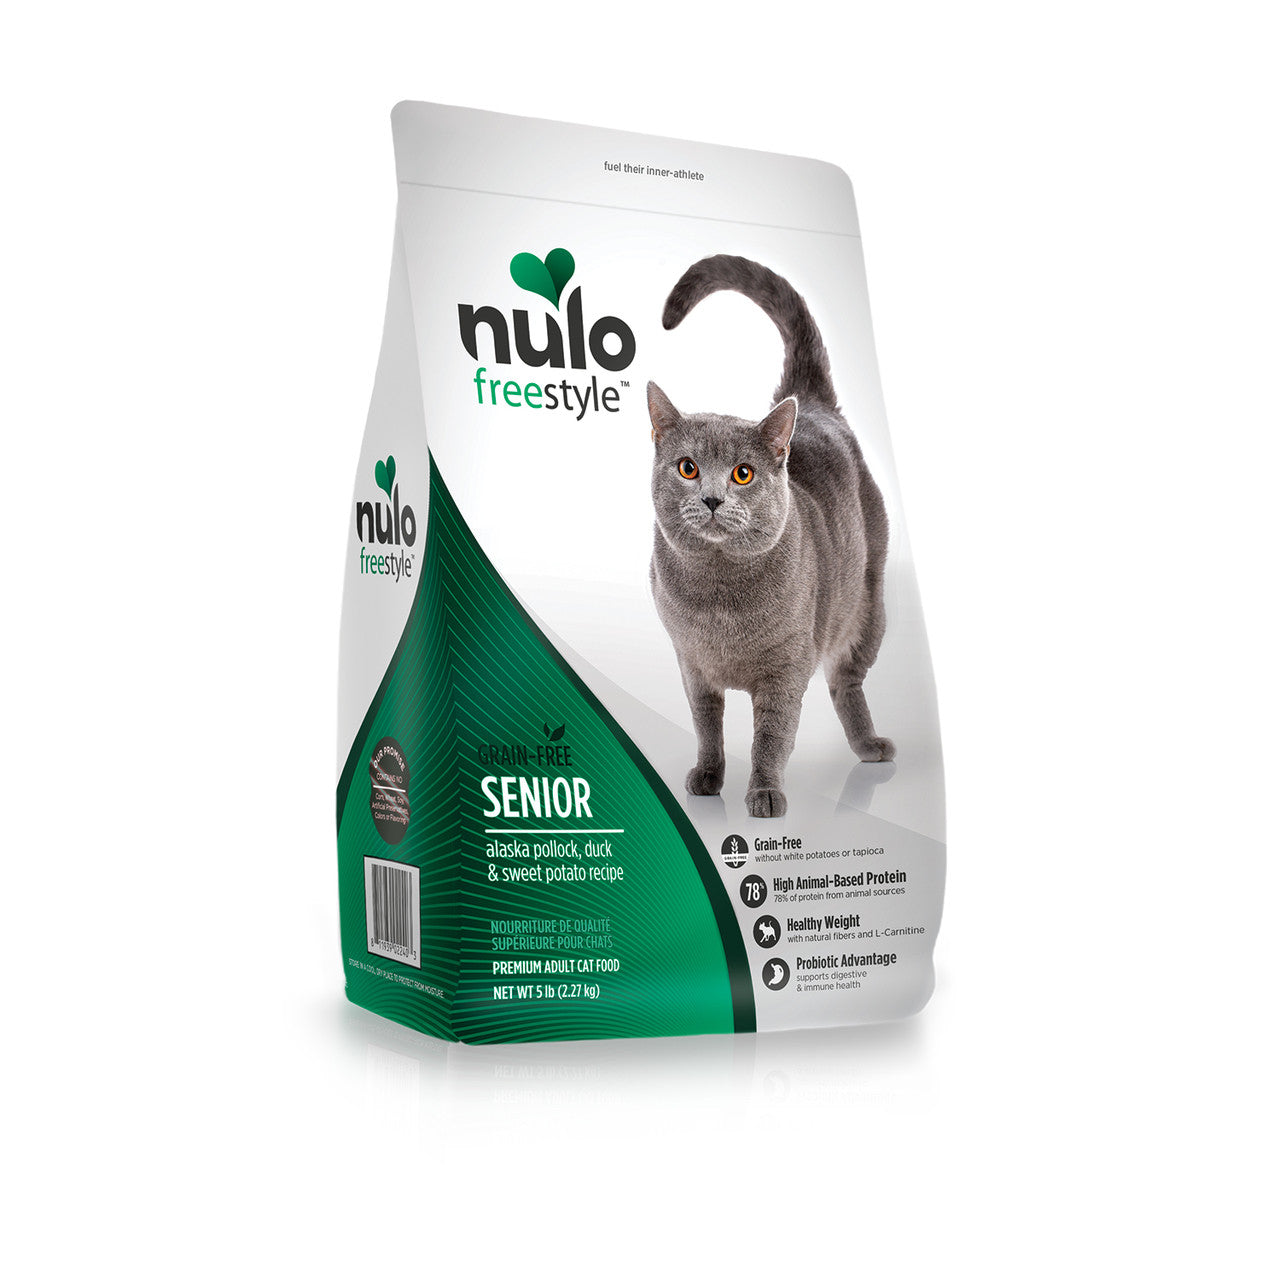 Nulo FreeStyle Grain-Free Pollock, Duck & Sweet Potato Senior Dry Cat Food, 5 lb